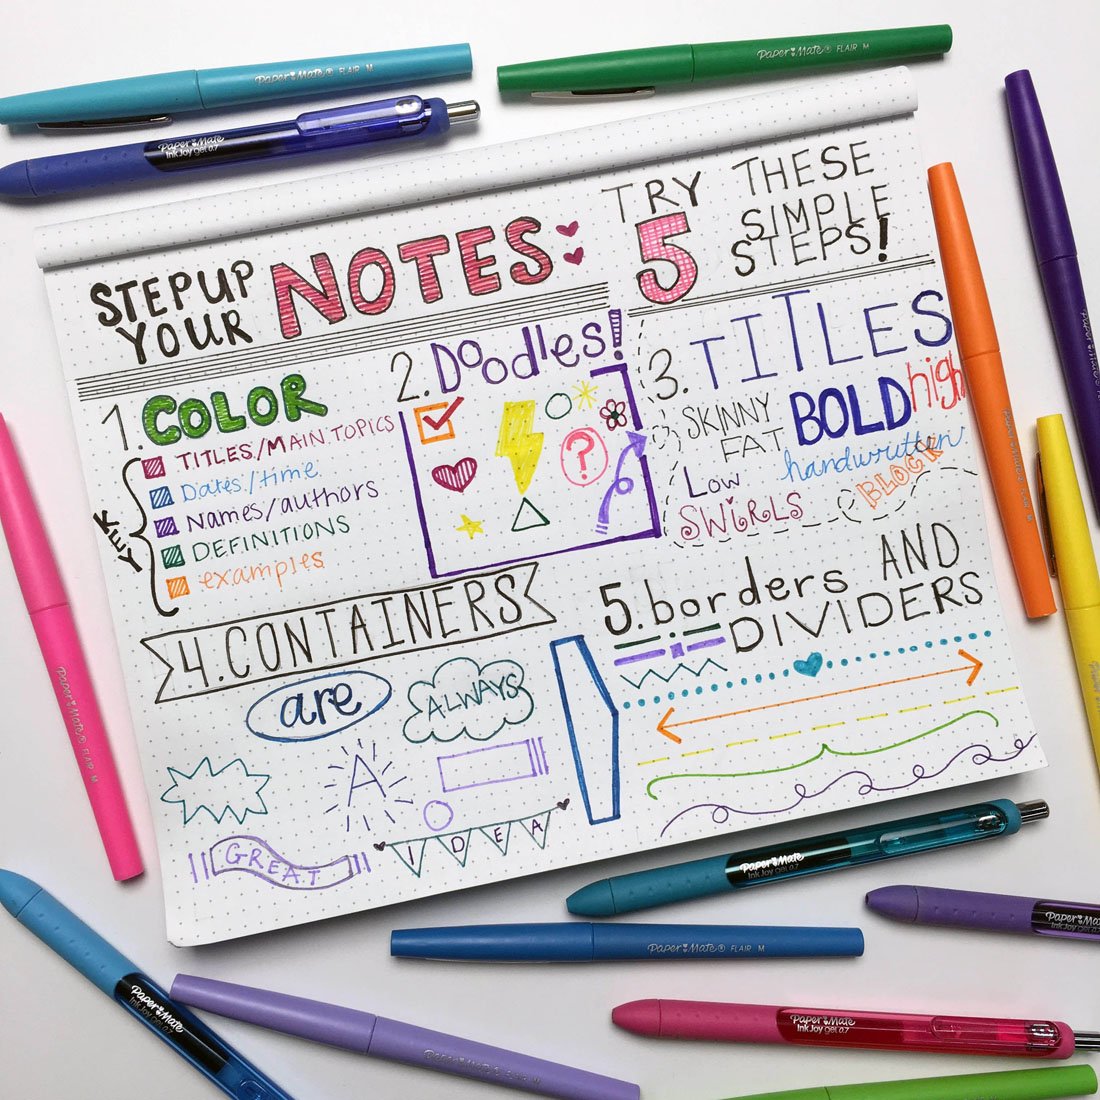 Notes taking ideas, colour pens